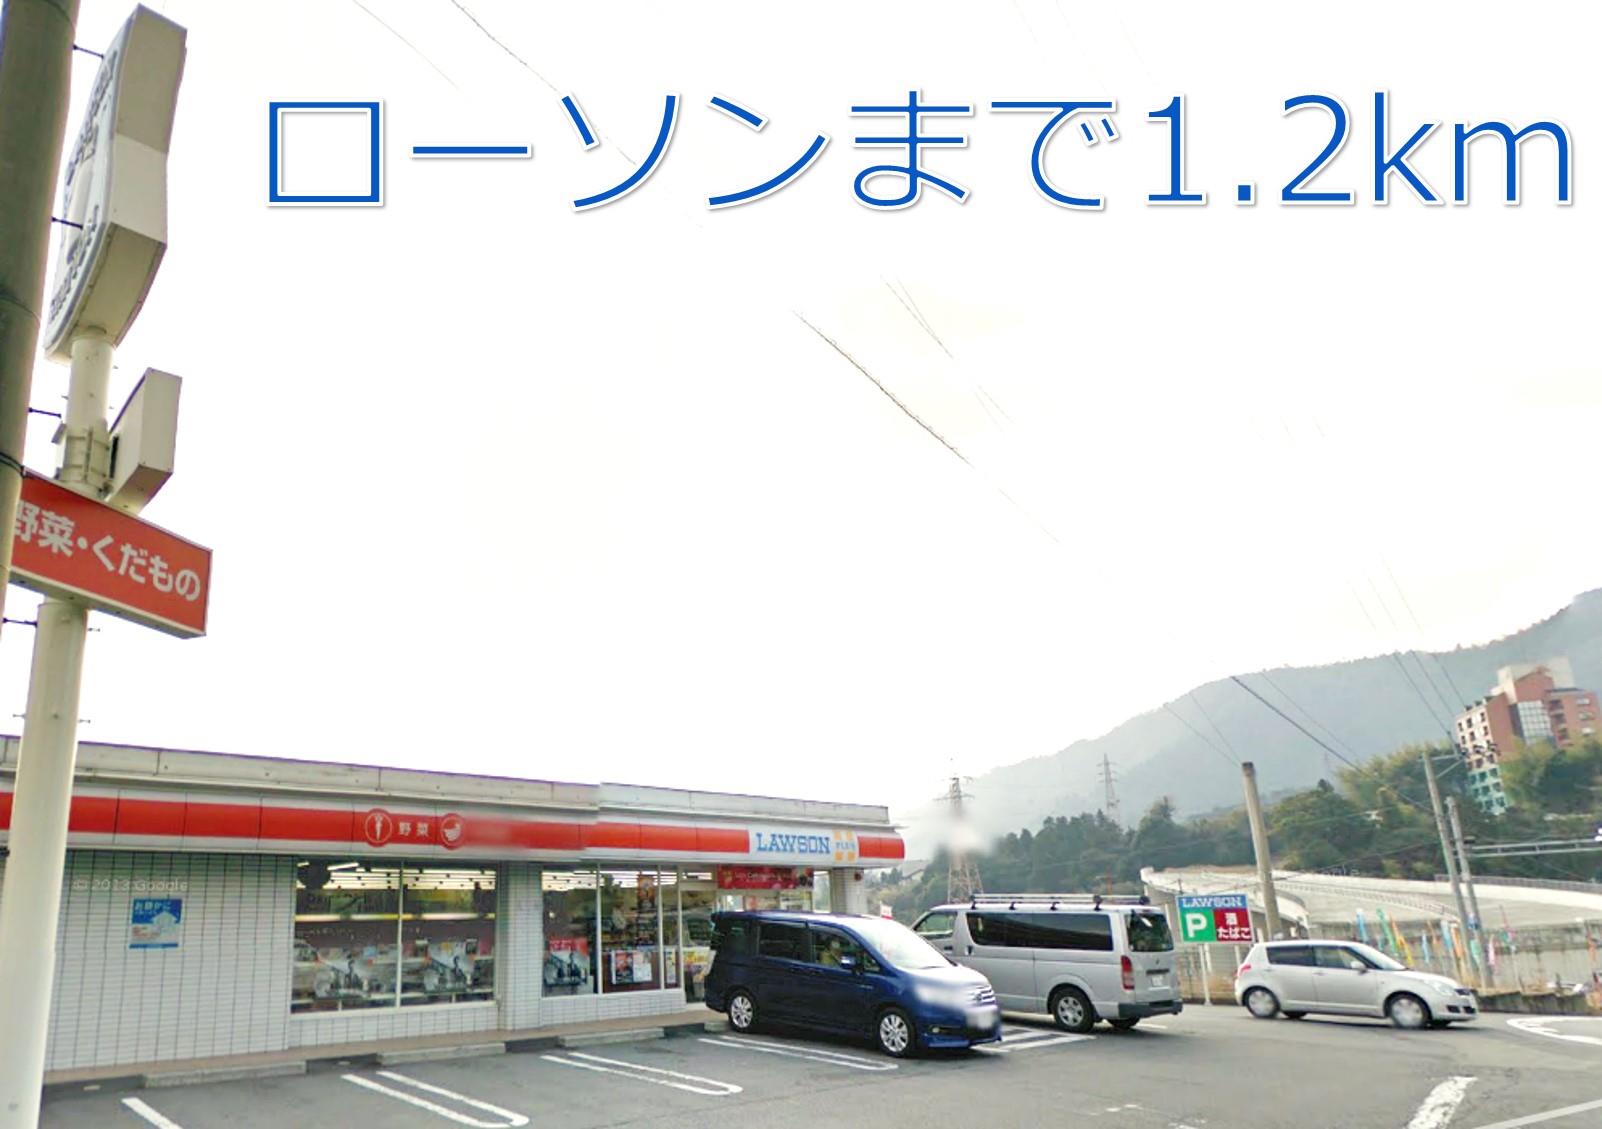 Convenience store. 1200m to Lawson (convenience store)